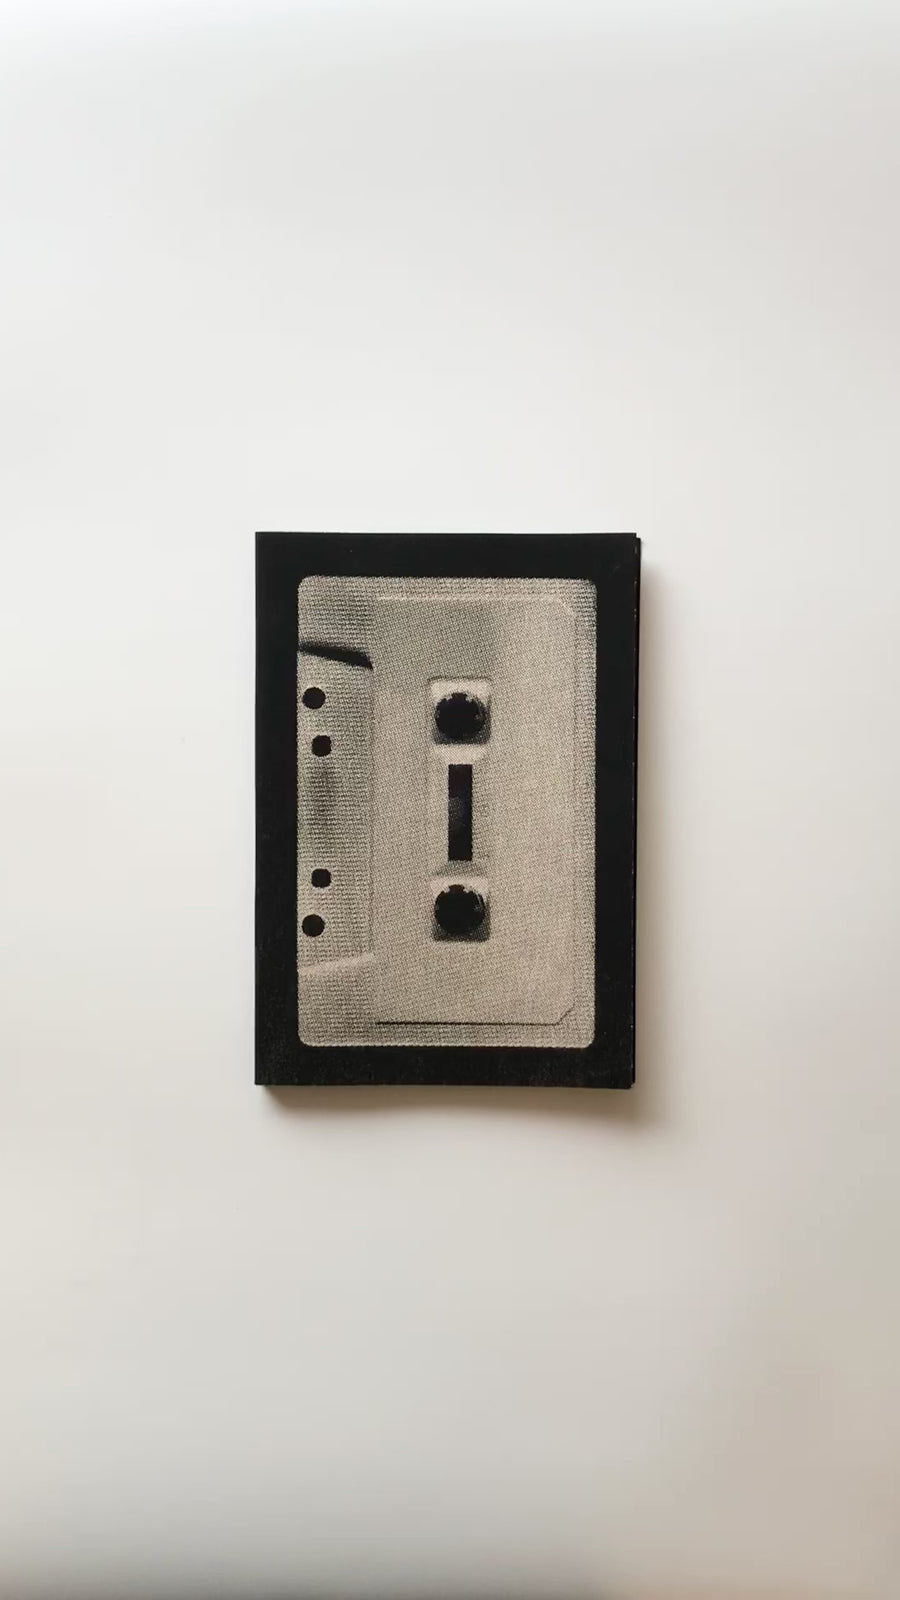 Tapes by Giasco Bertoli